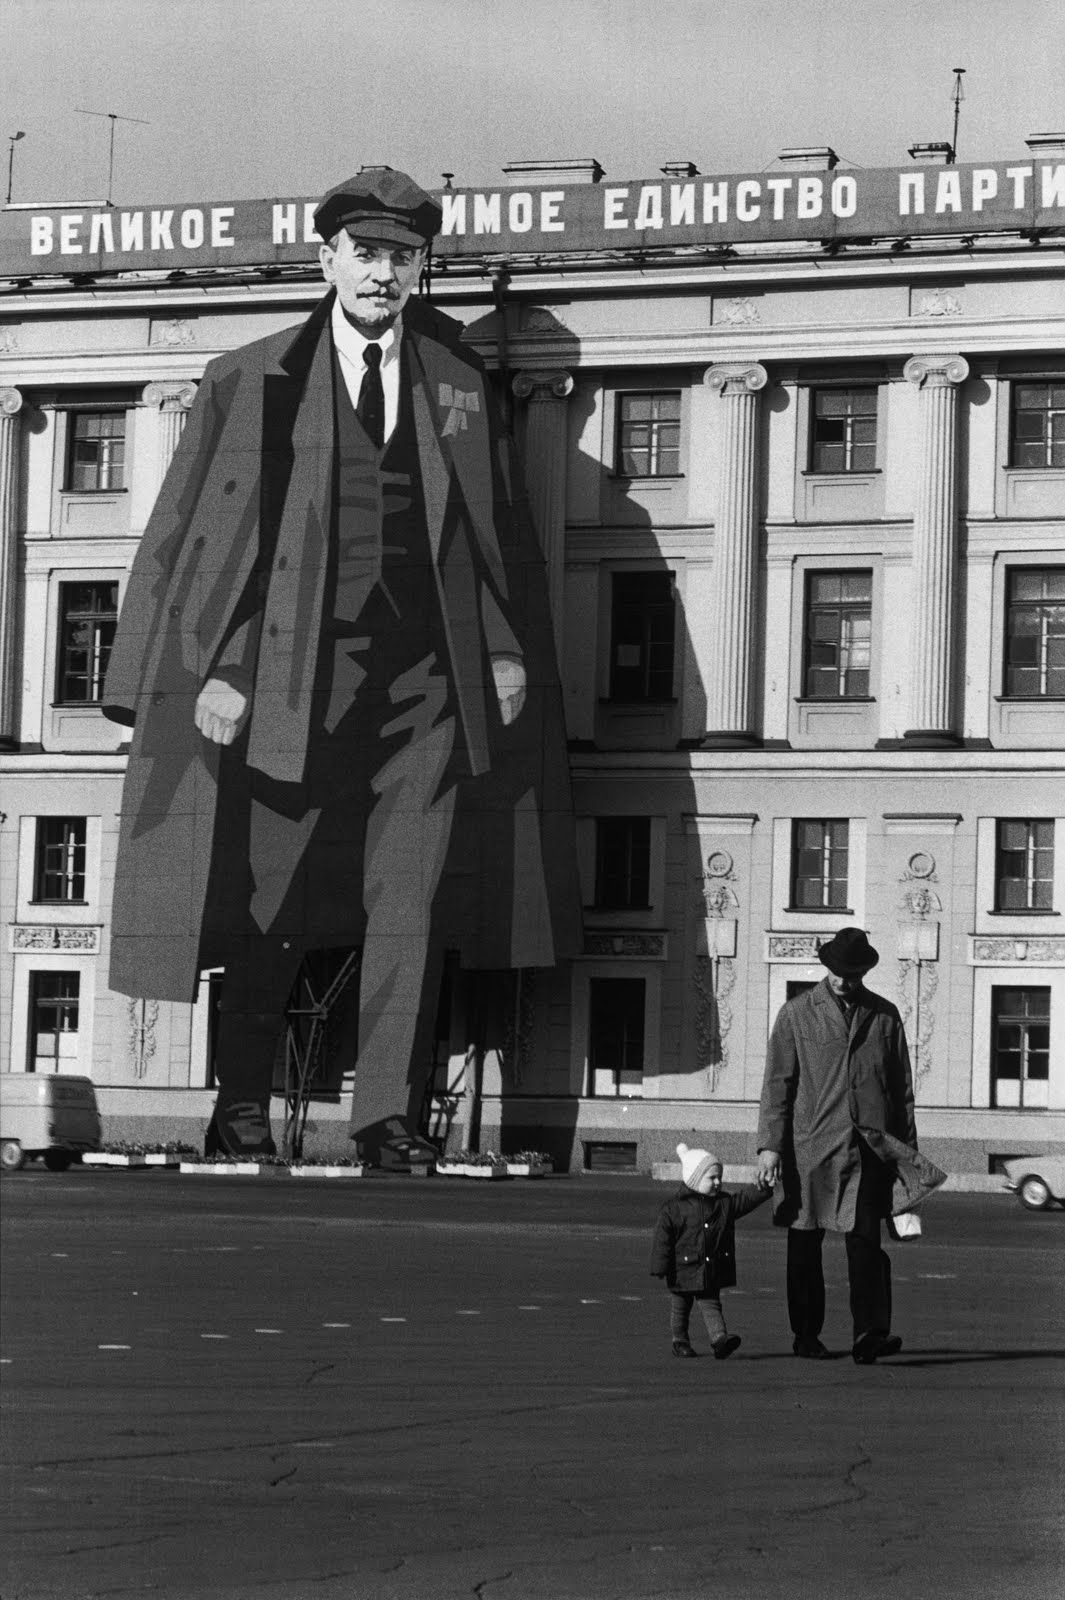 Henri Cartier-Bresson, Giant effigy of Lenin, Winter Palace, Leningrad, Russia, 1973